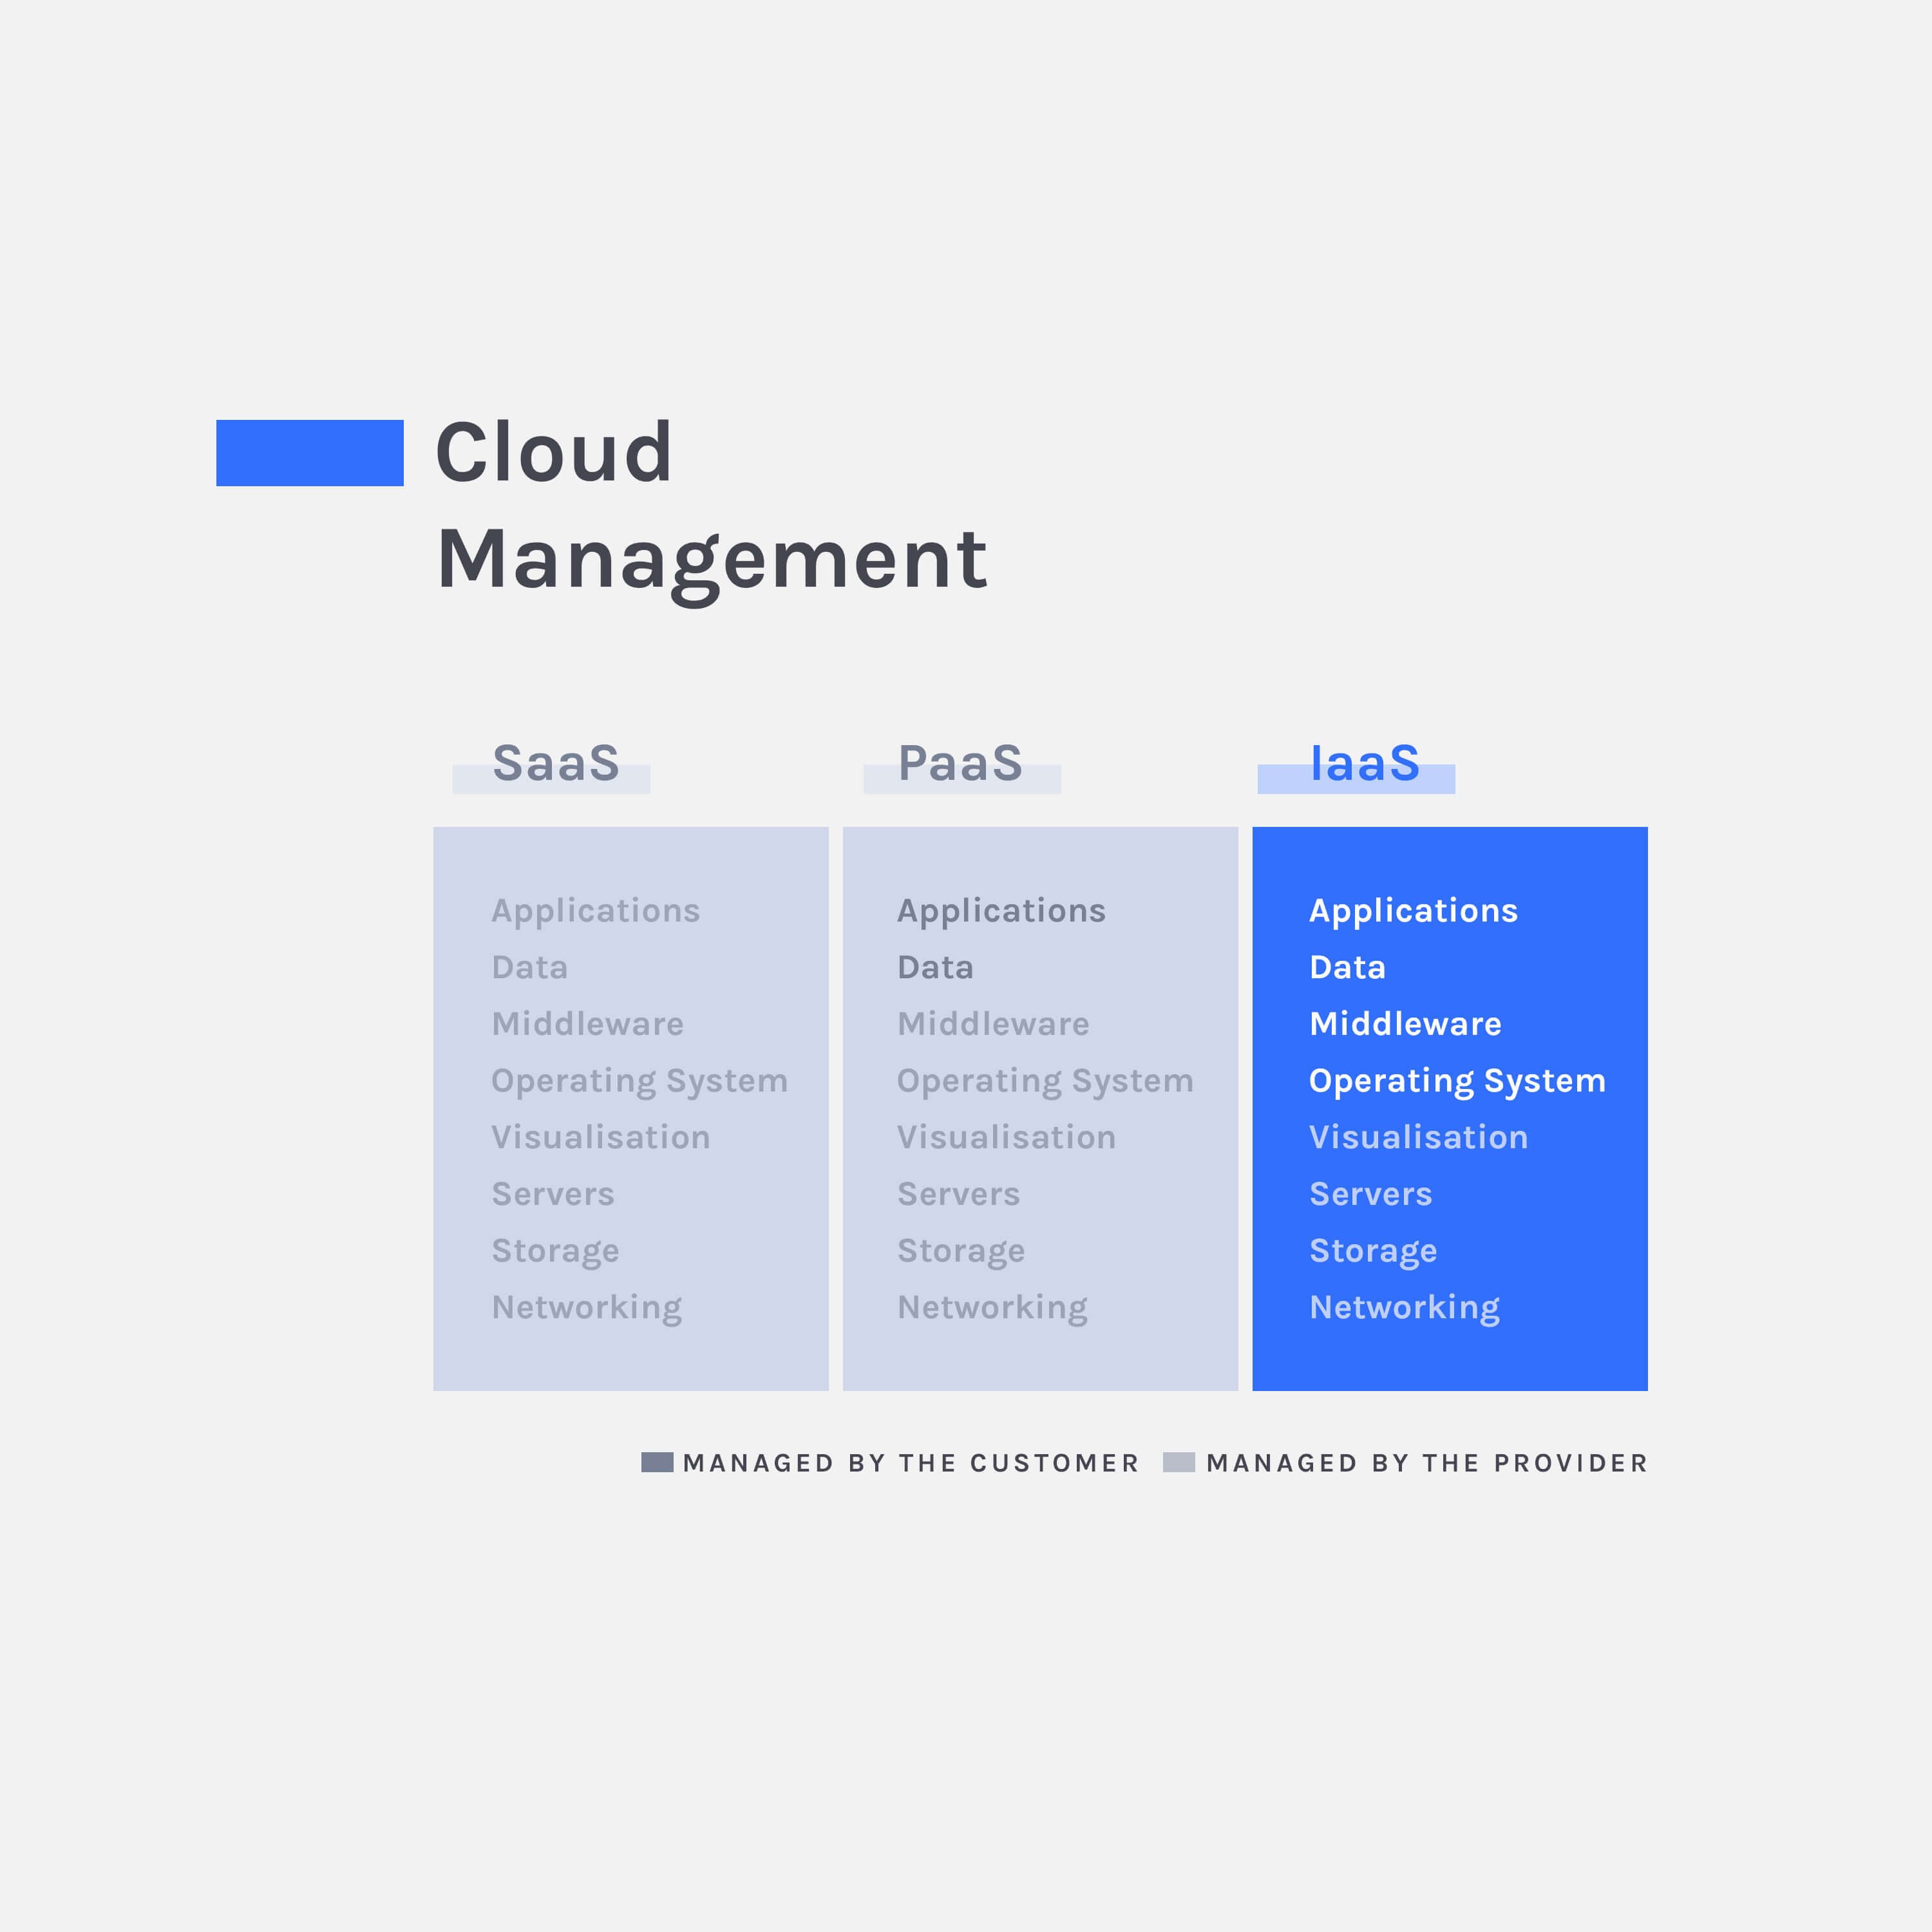 iaas cloud management